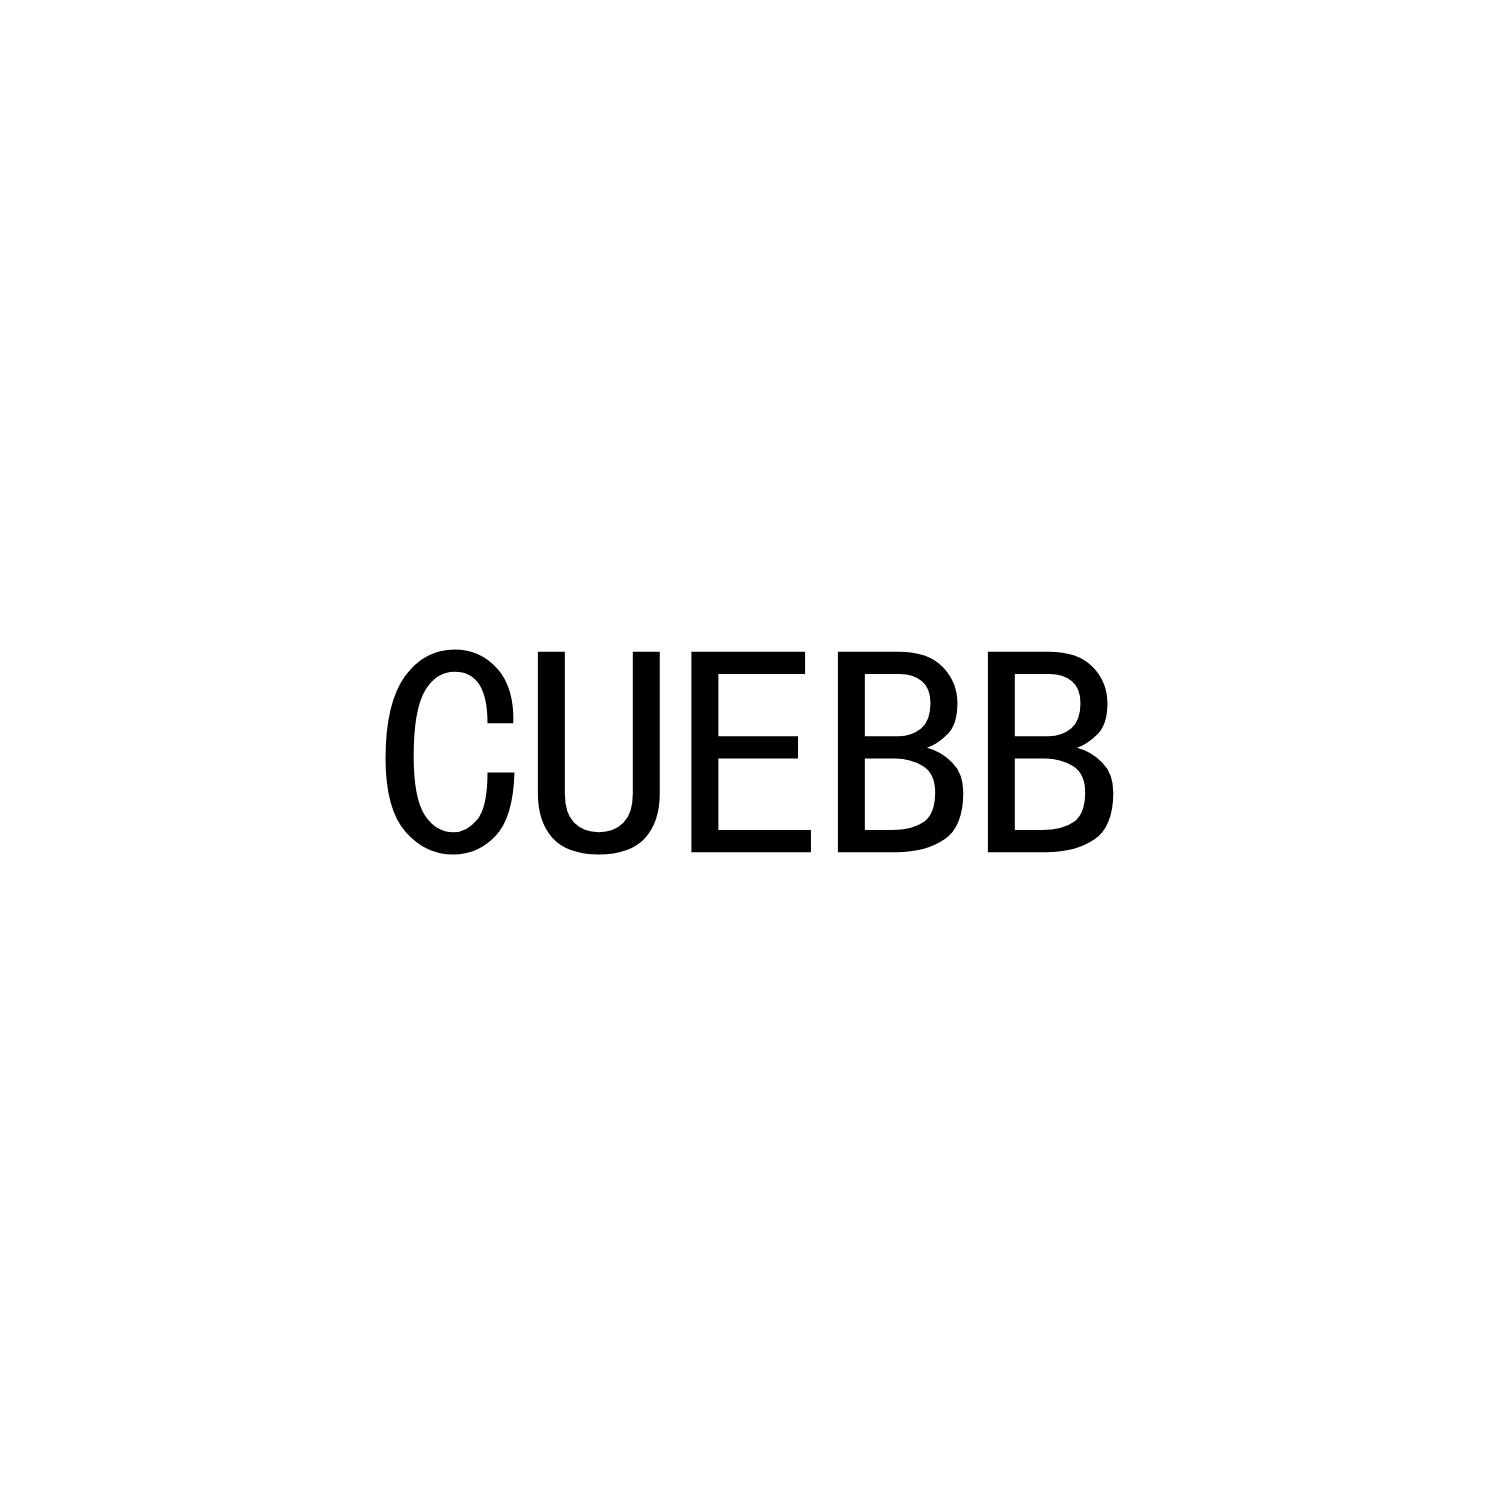 CUEBB